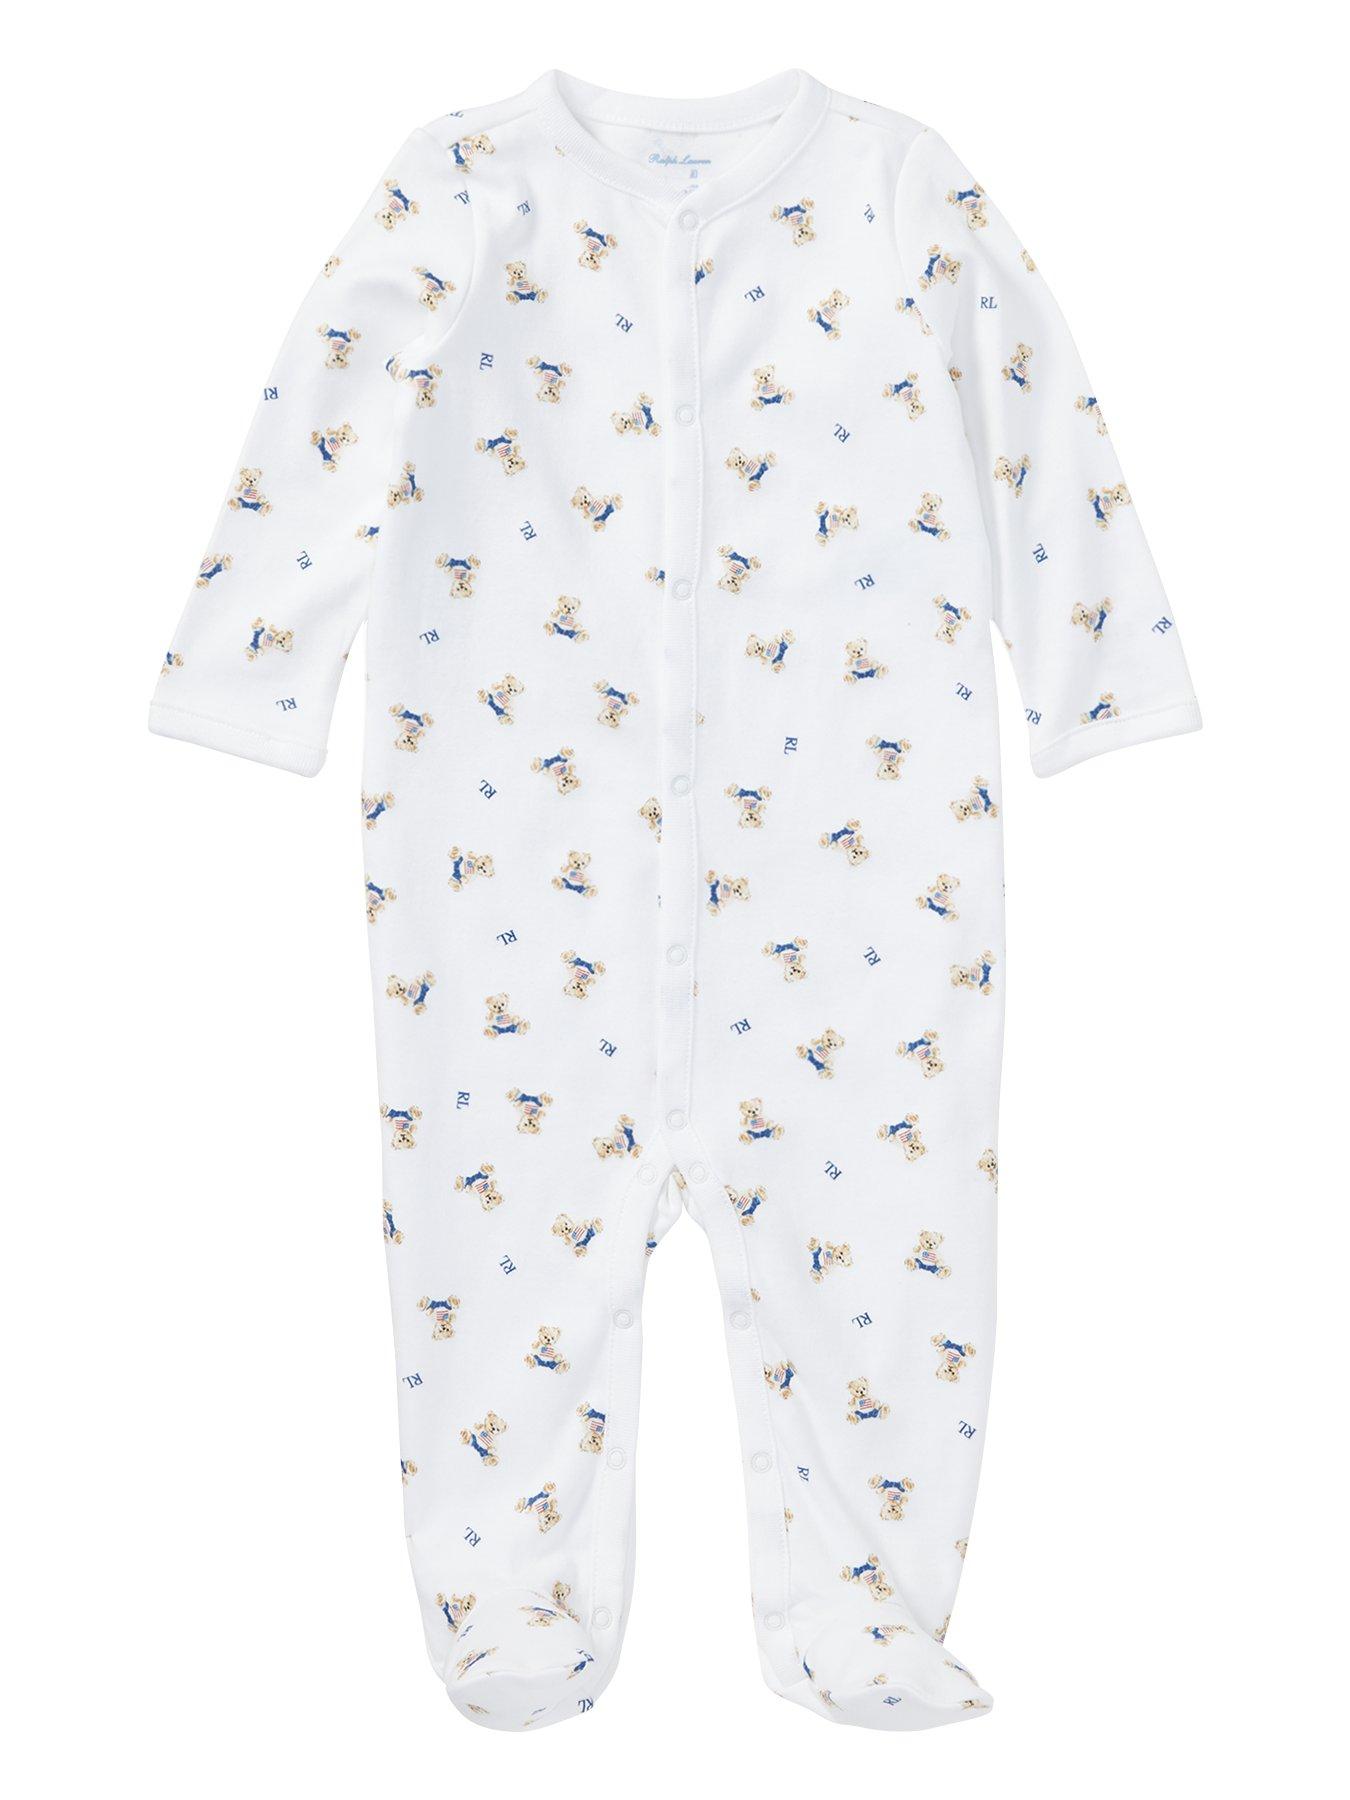 Ralph Lauren Baby Clothes | Newborn & Infant | Very